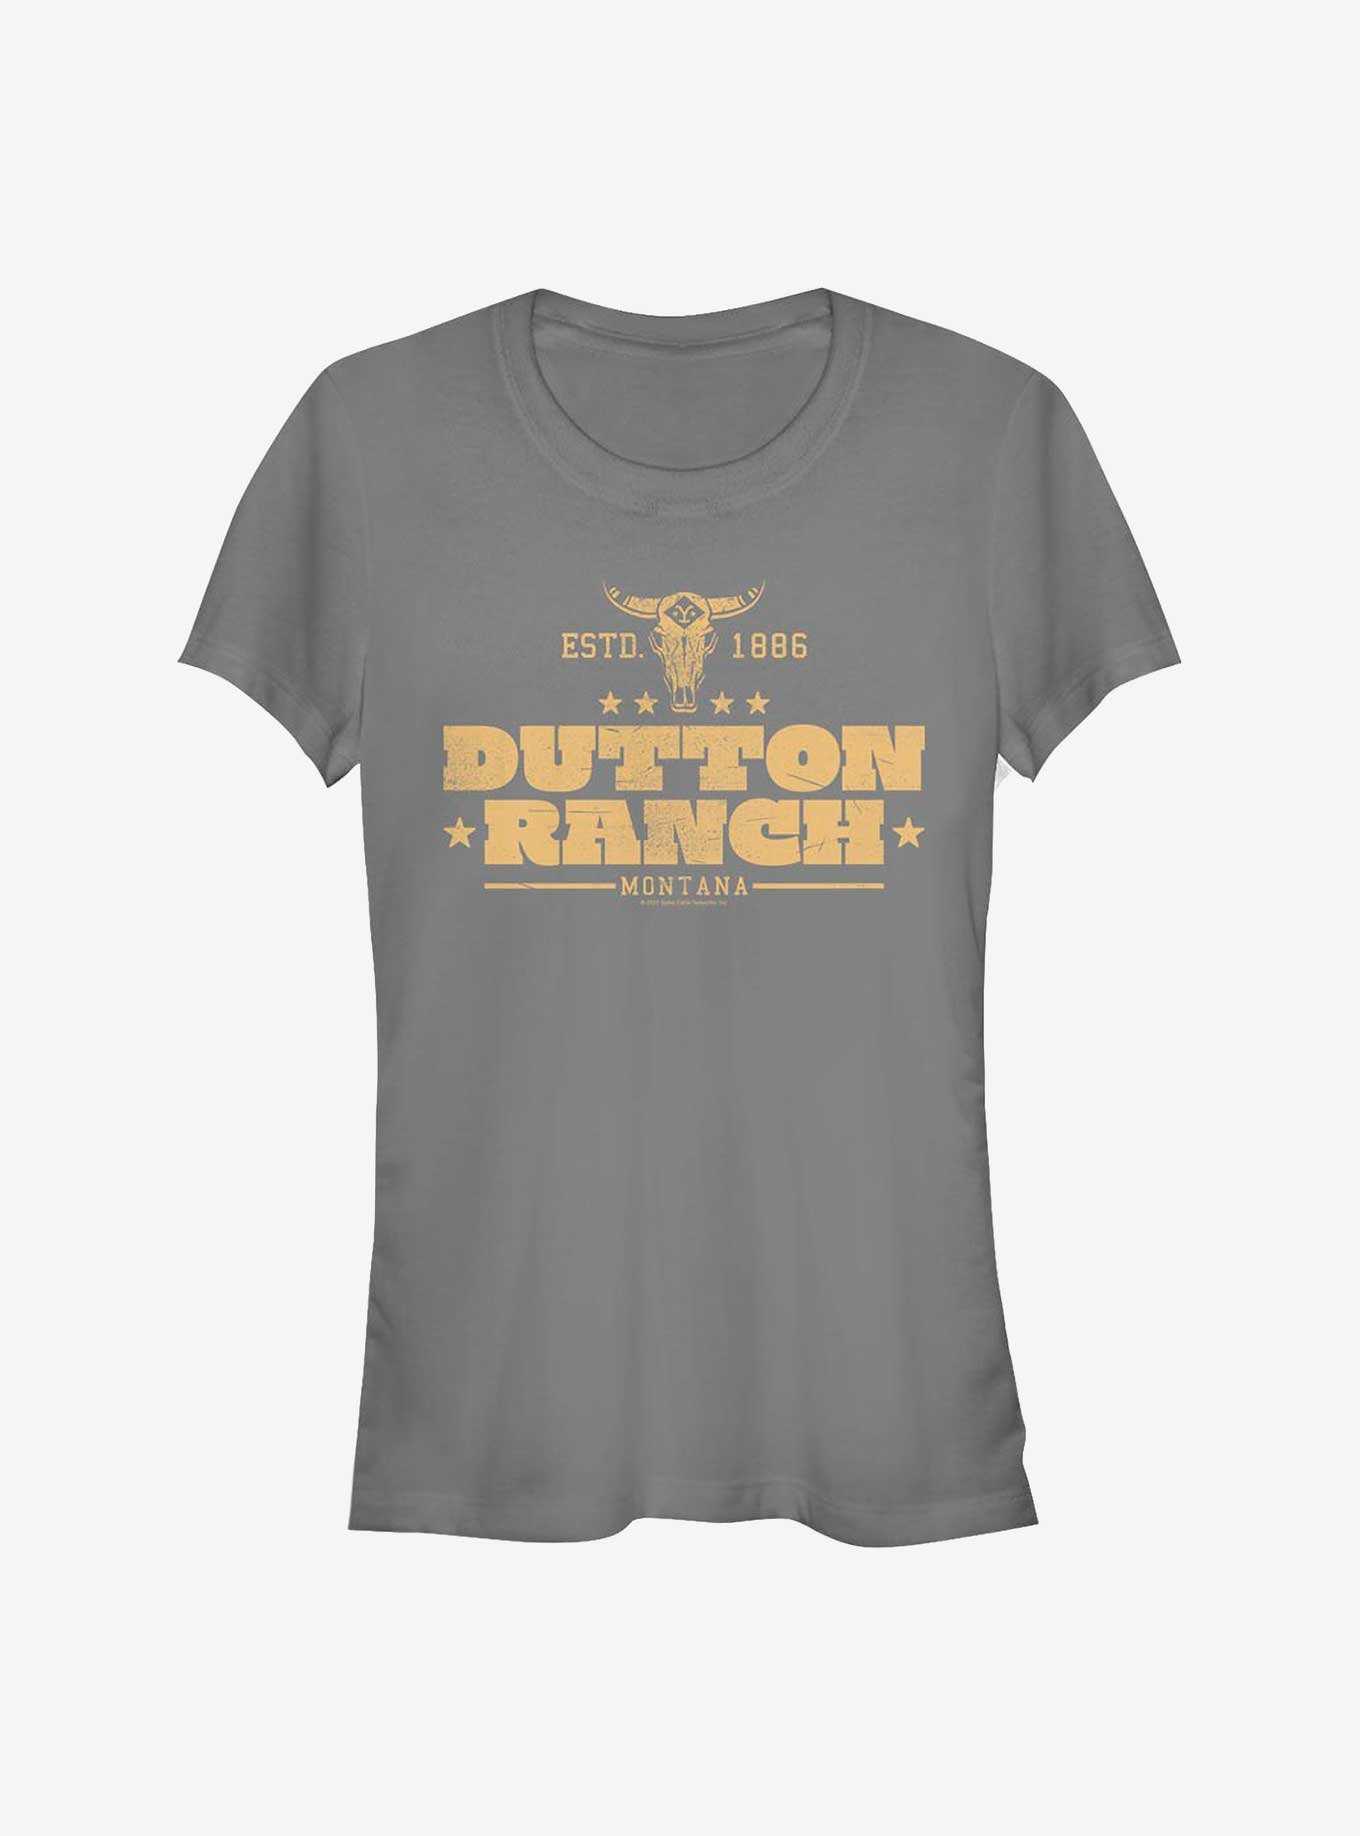 Yellowstone Dutton Ranch Est. 1886 Girls T-Shirt, , hi-res